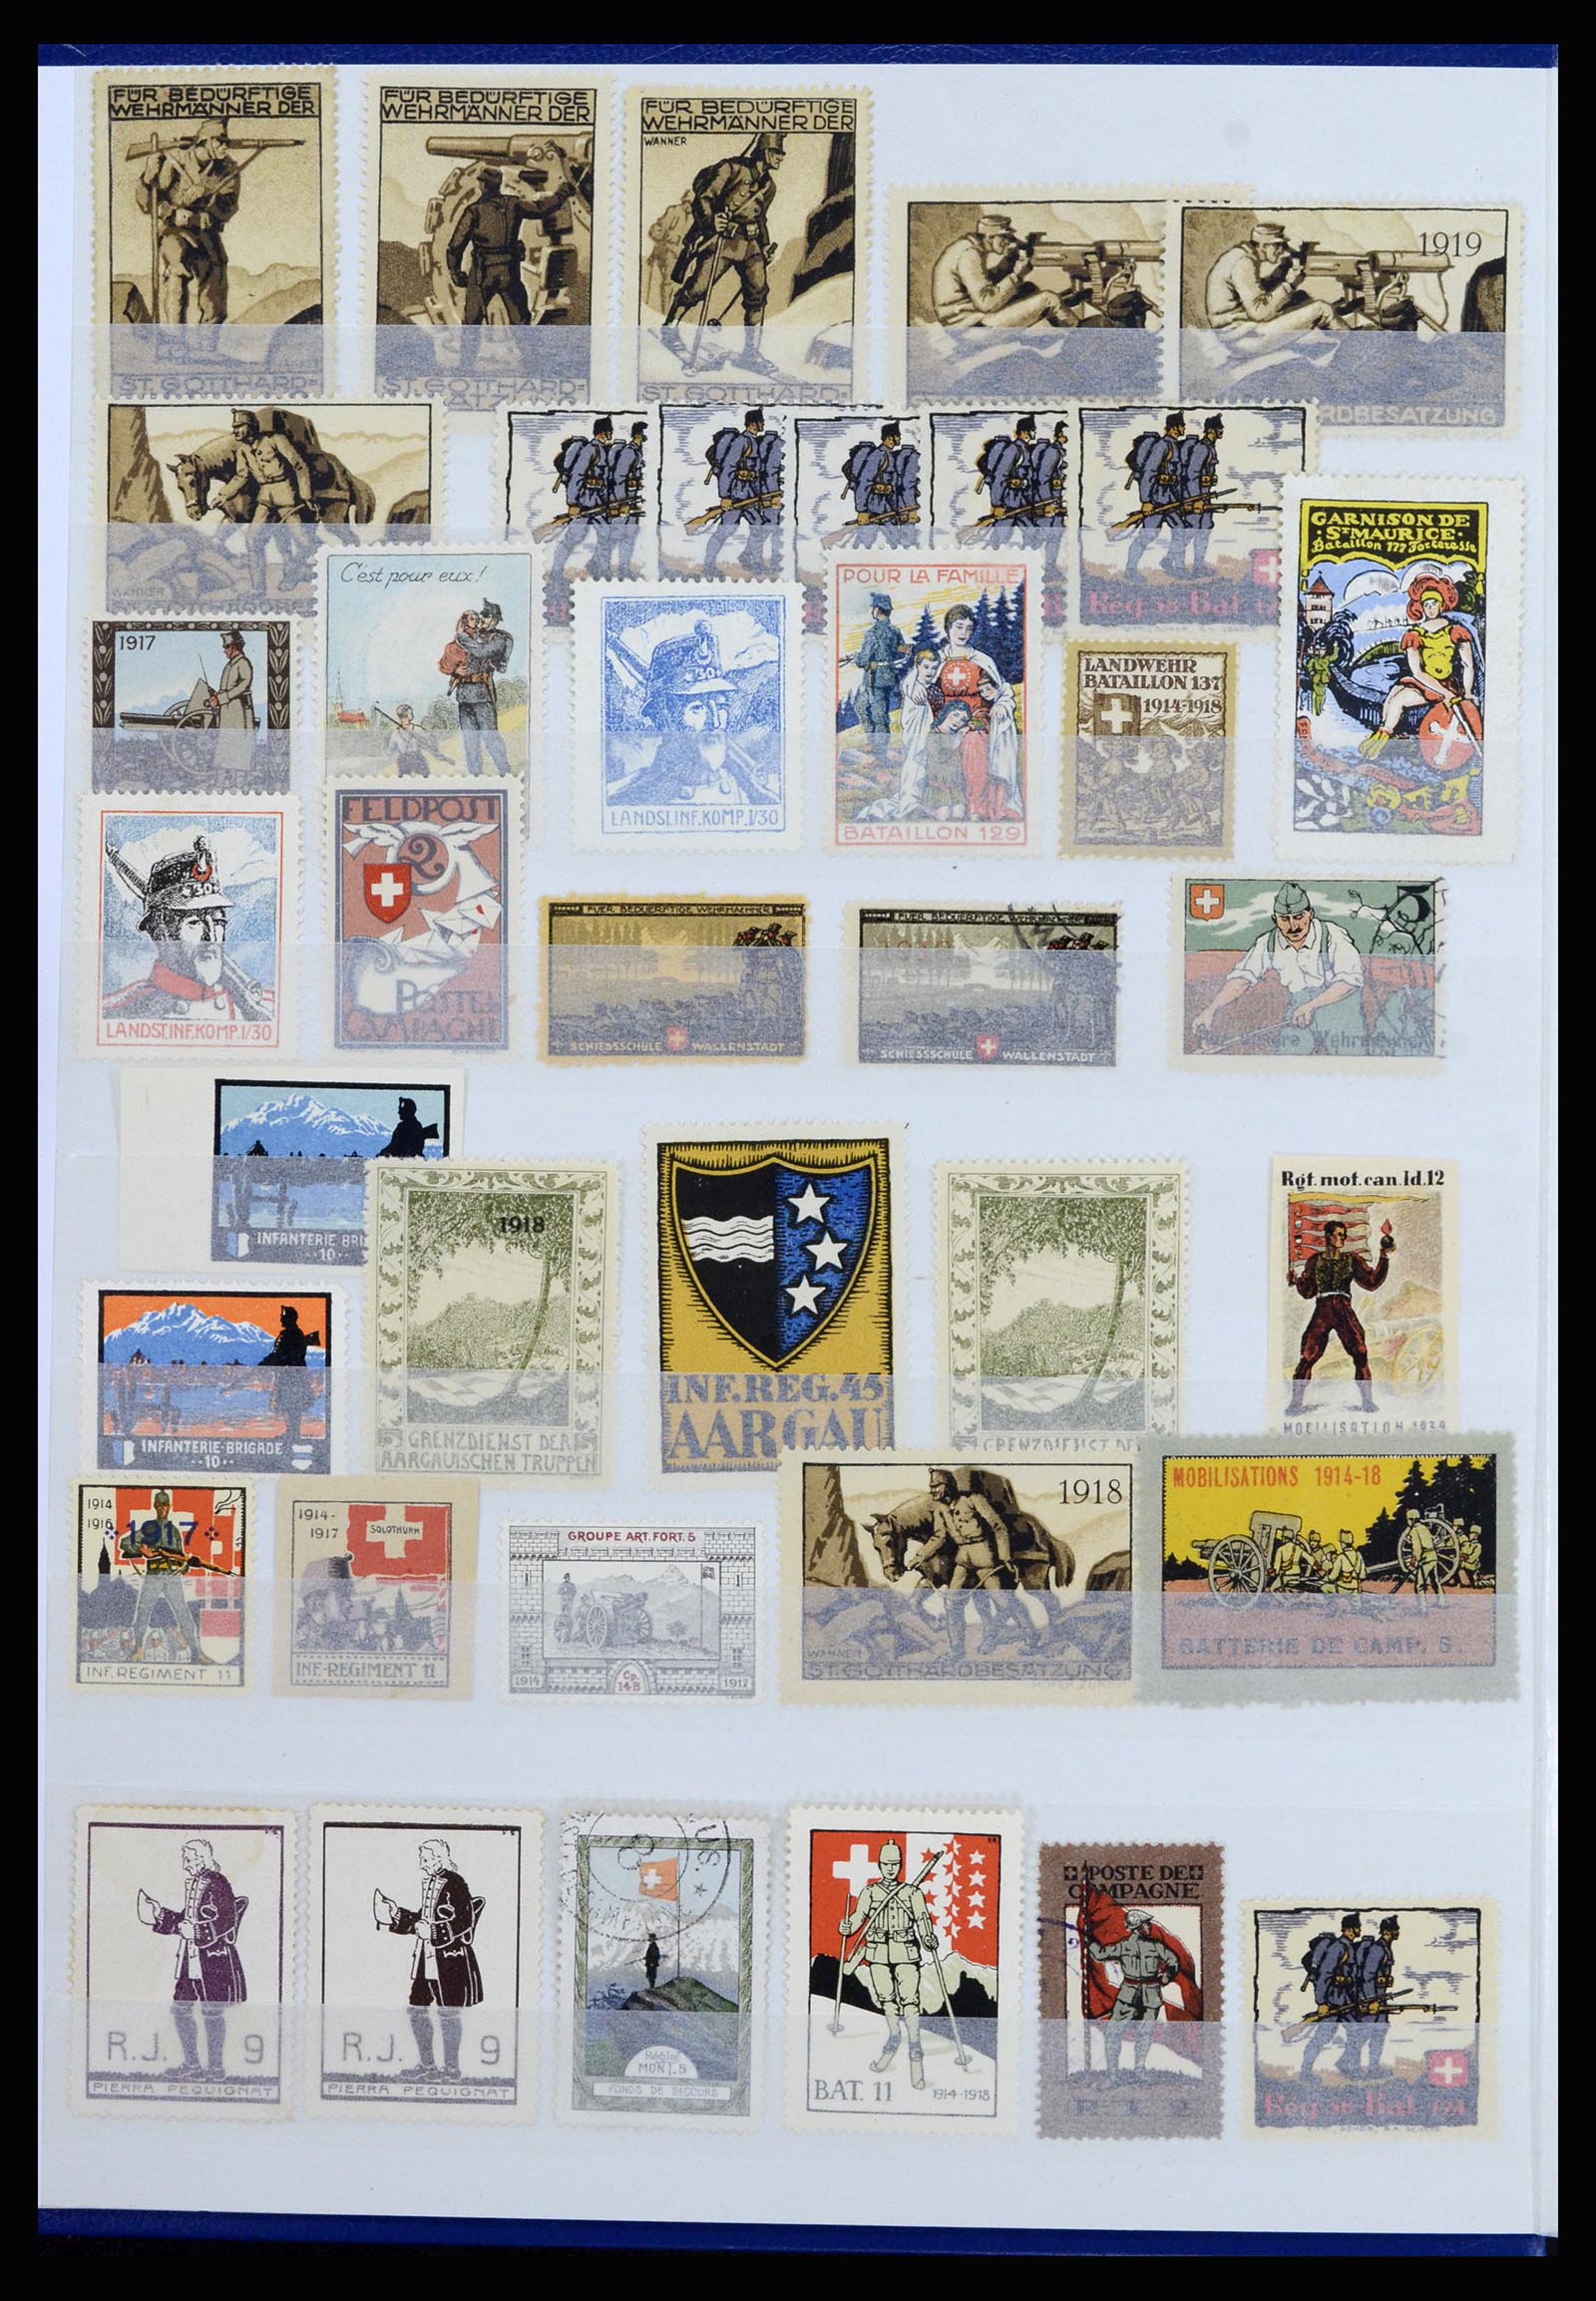 37149 002 - Stamp collection 37149 Switzerland soldier stamps 1914-1945.